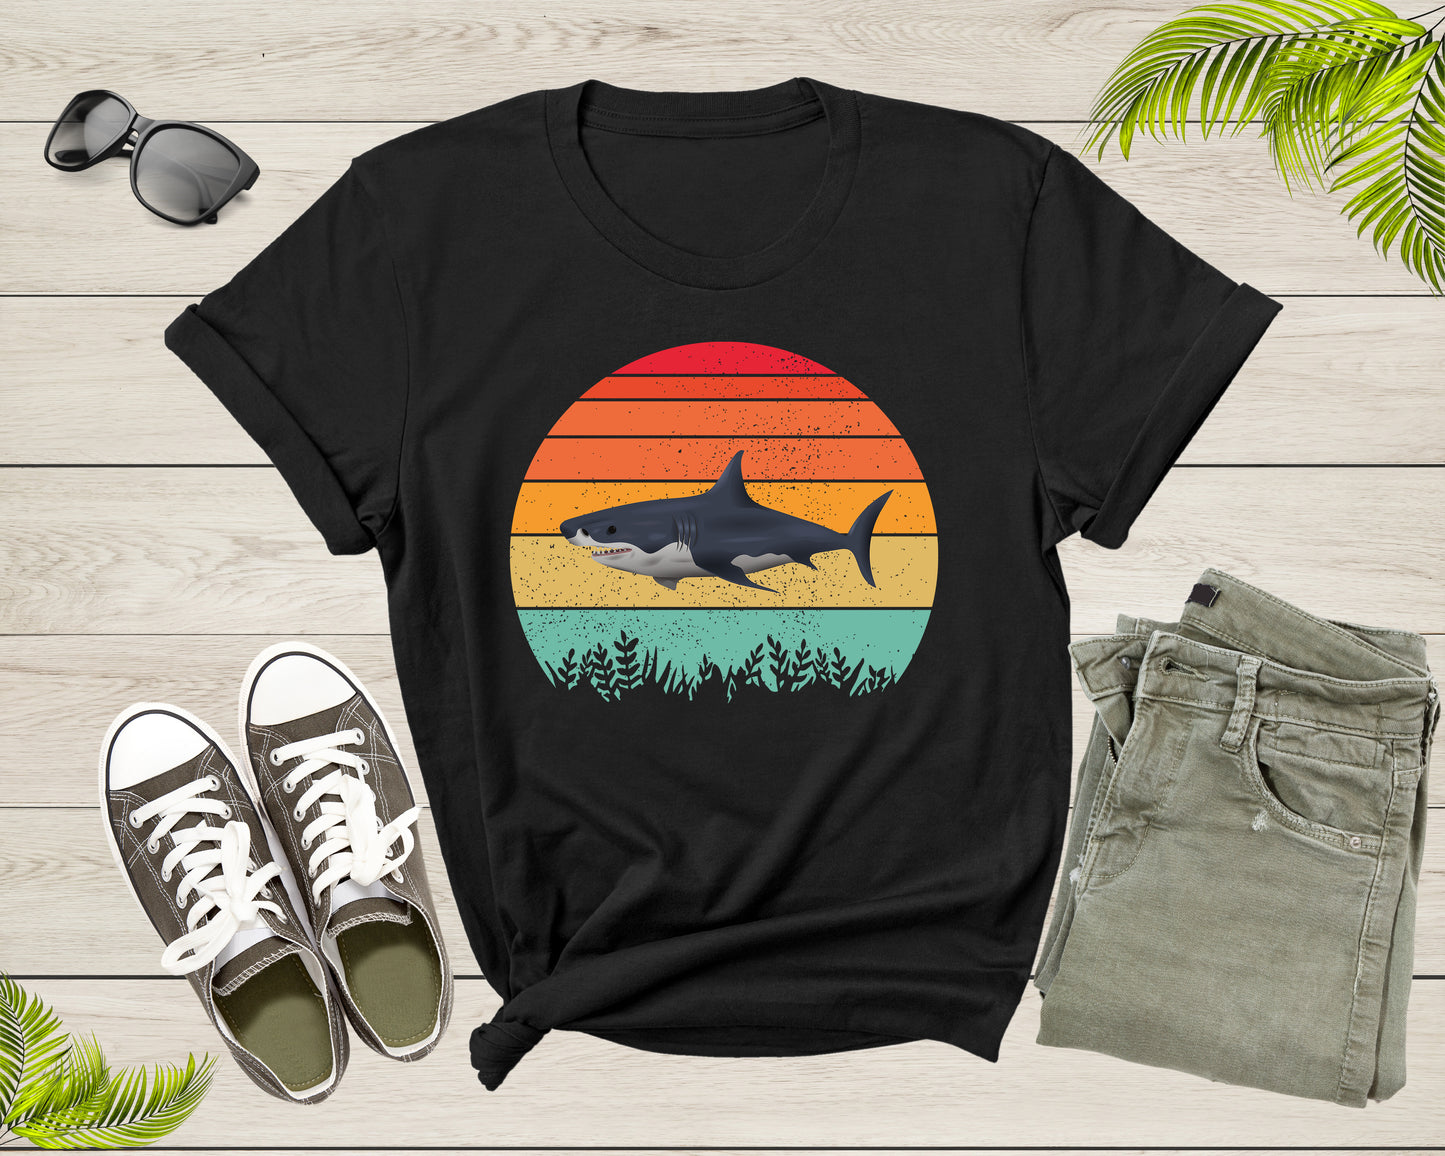 Retro Sunset Vintage Cute Shark Lover Fish Animal Lover Gifts Men Shirt T-Shirt Ocean Life Shirt Shark Birthday Shirt for Women Men Kids